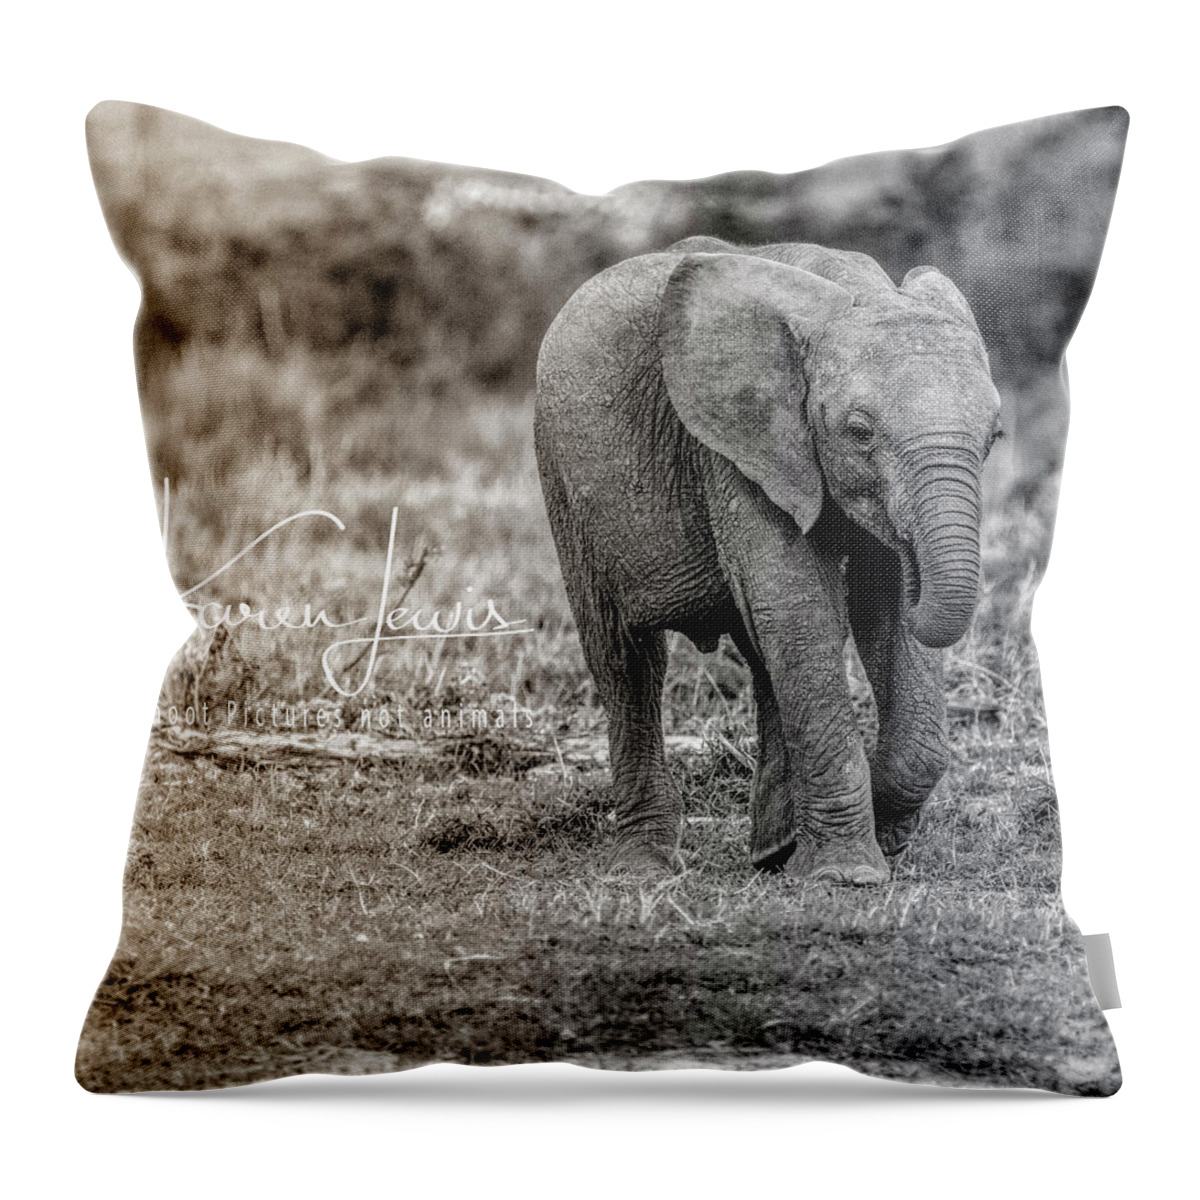 #baby #elephant #onetherun #running #cute #adorable #sweet #innocent #africa #masaimara #kenya #shootpicturesnotelephants Throw Pillow featuring the photograph On the Run by Karen Lewis